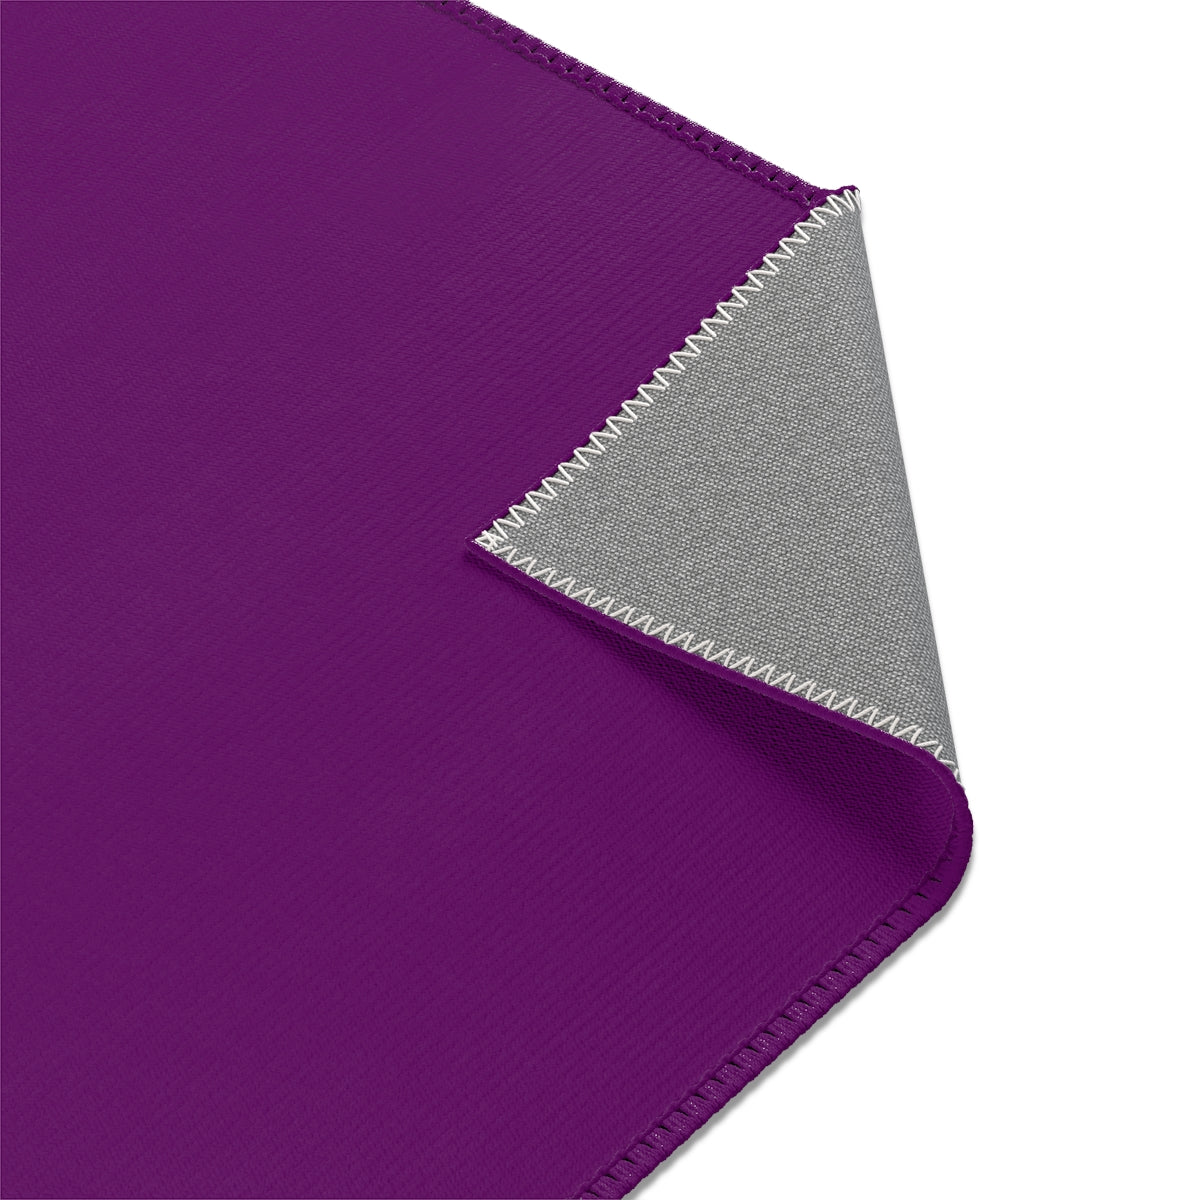 Purple Area Rug Carpet, Home Floor Decor Chic 2x3 4x6 3x5 Designer Living Room Accent Decorative Bedroom Mat Starcove Fashion